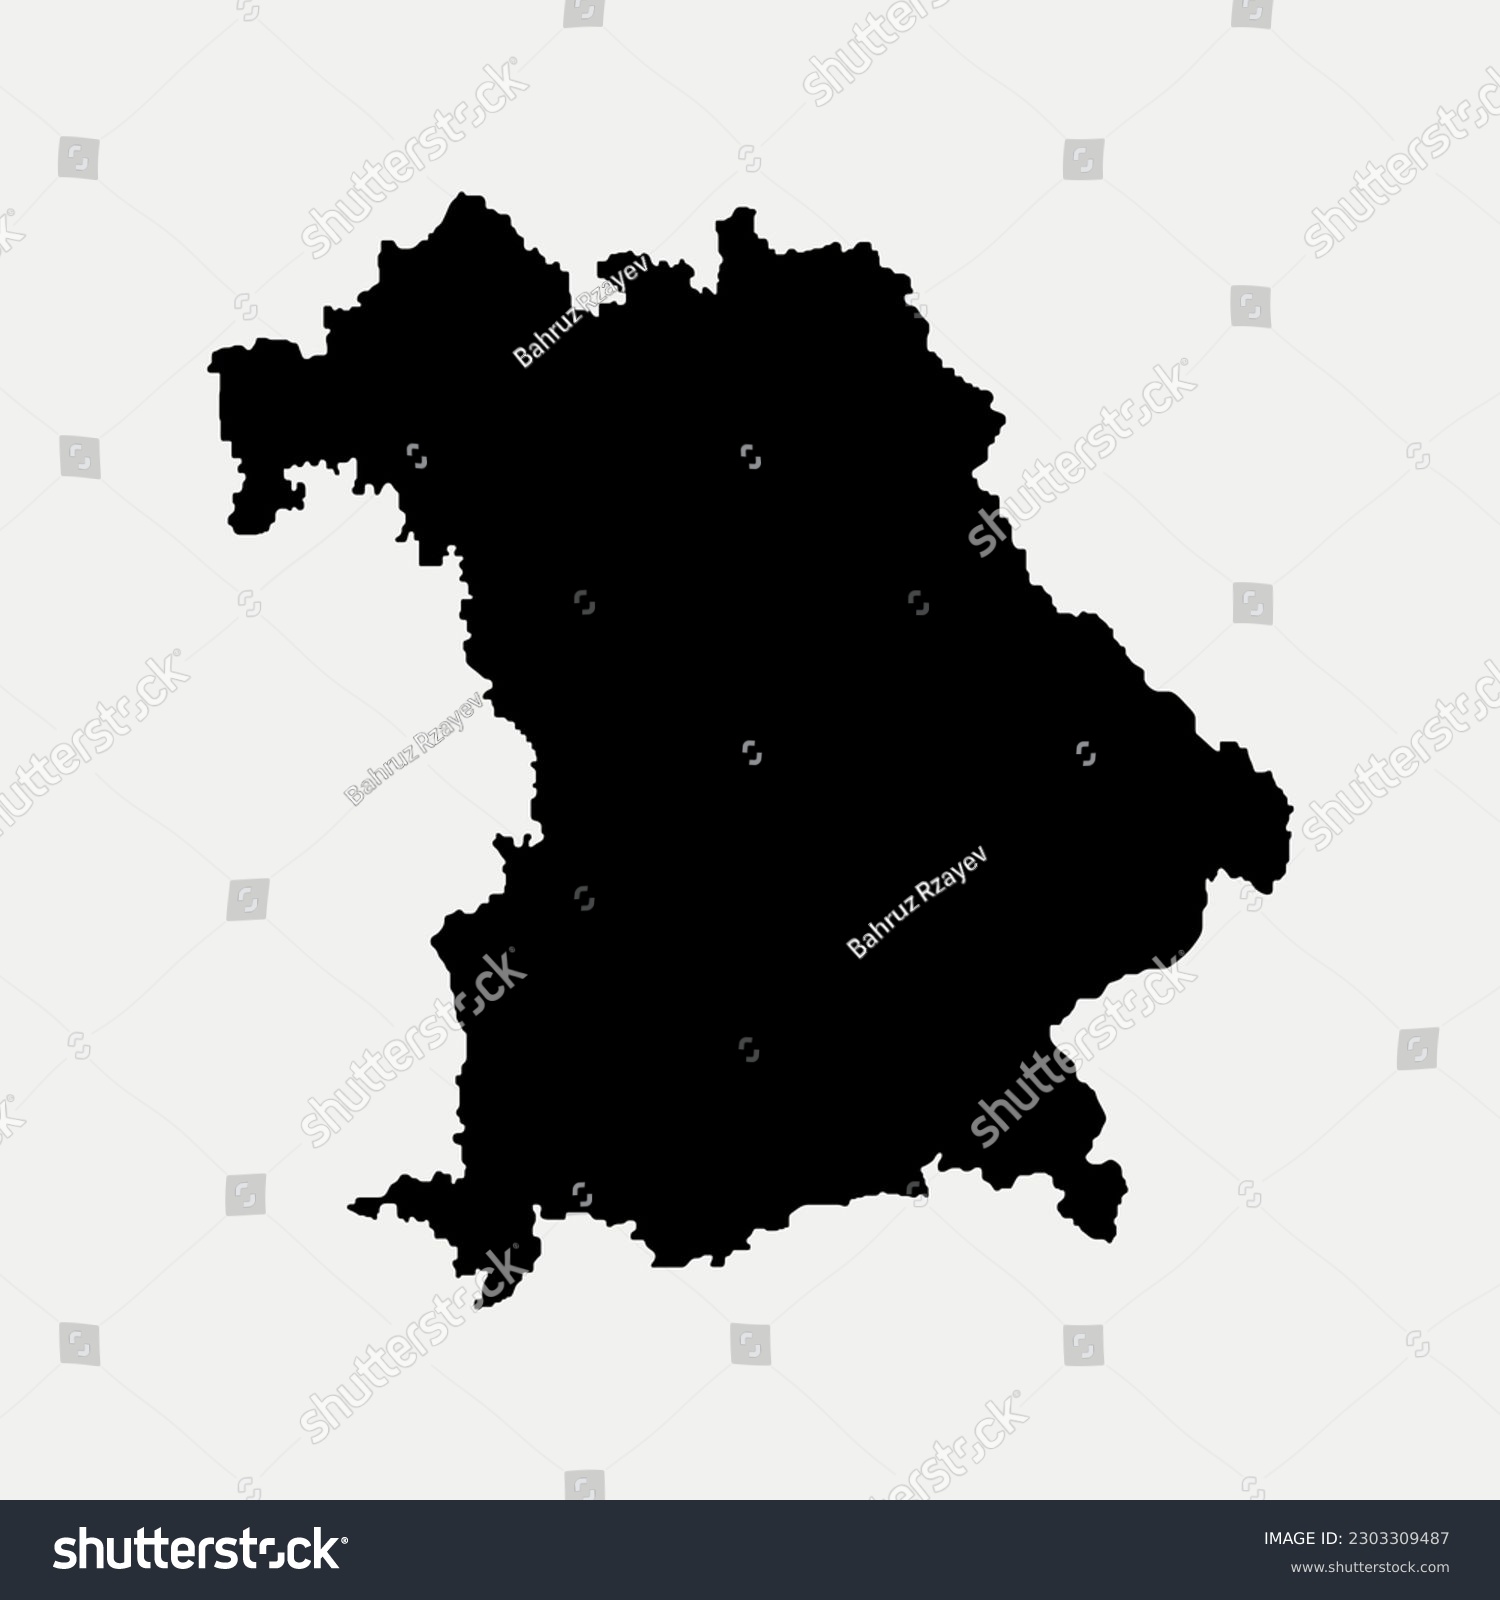 SVG of Map of Bavaria - Germany region outline silhouette graphic element Illustration template design
 svg